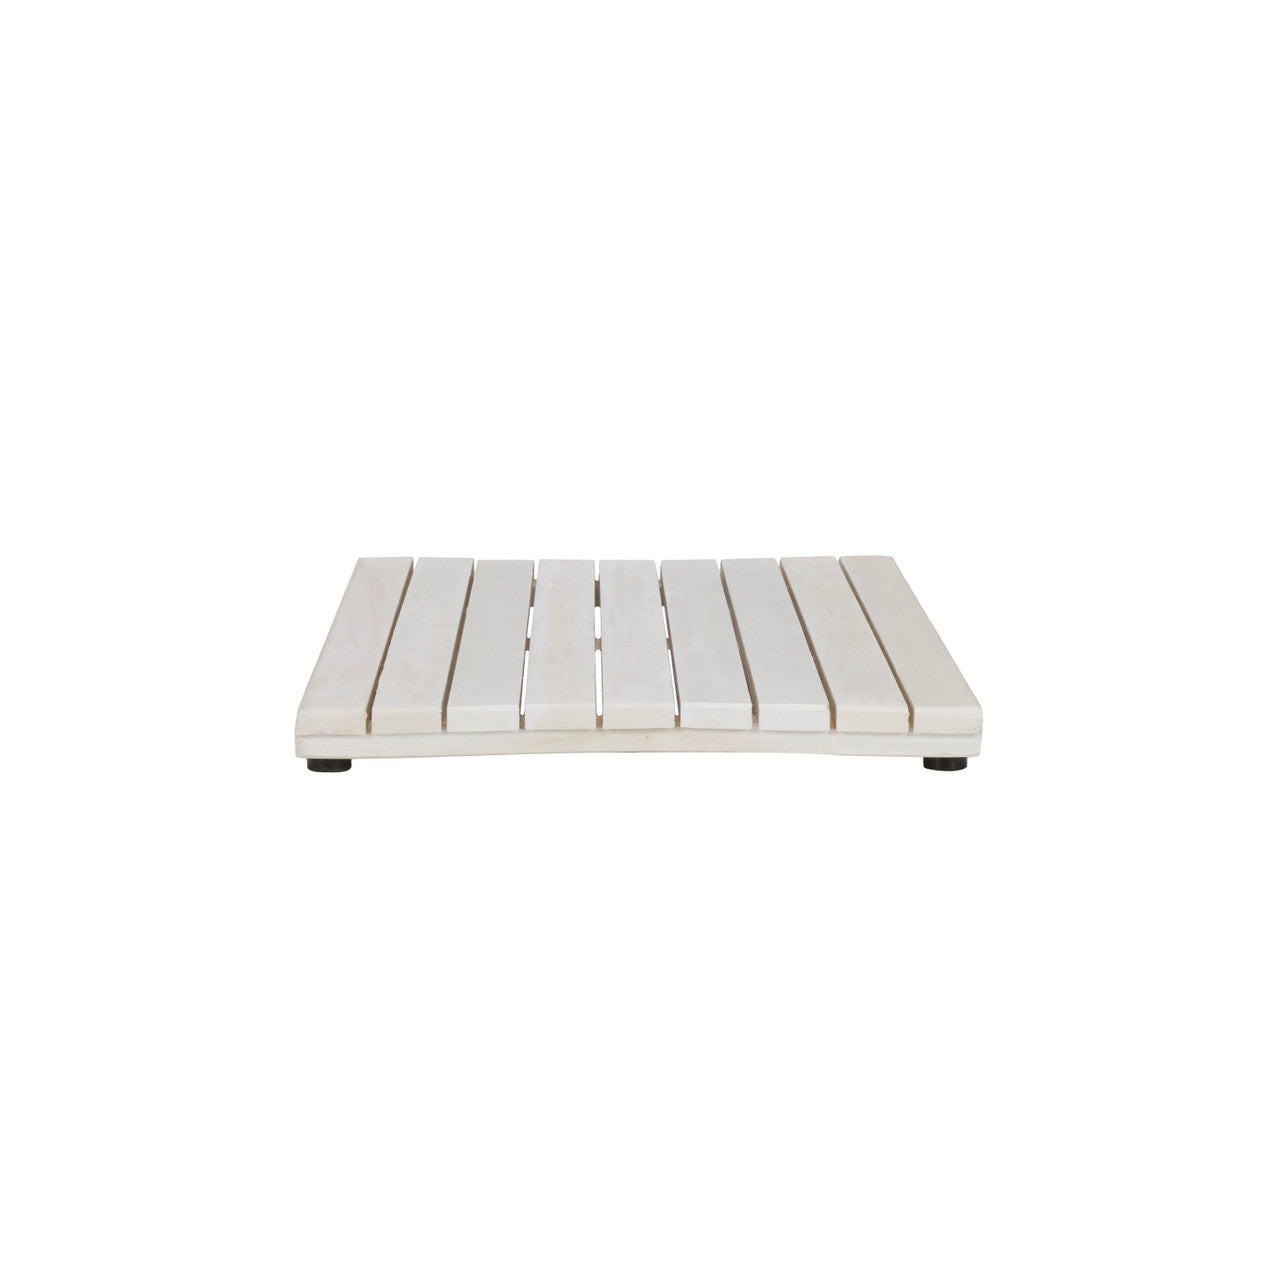 CoastalVogue® Eleganto® 23” Floor Mat in White Finish